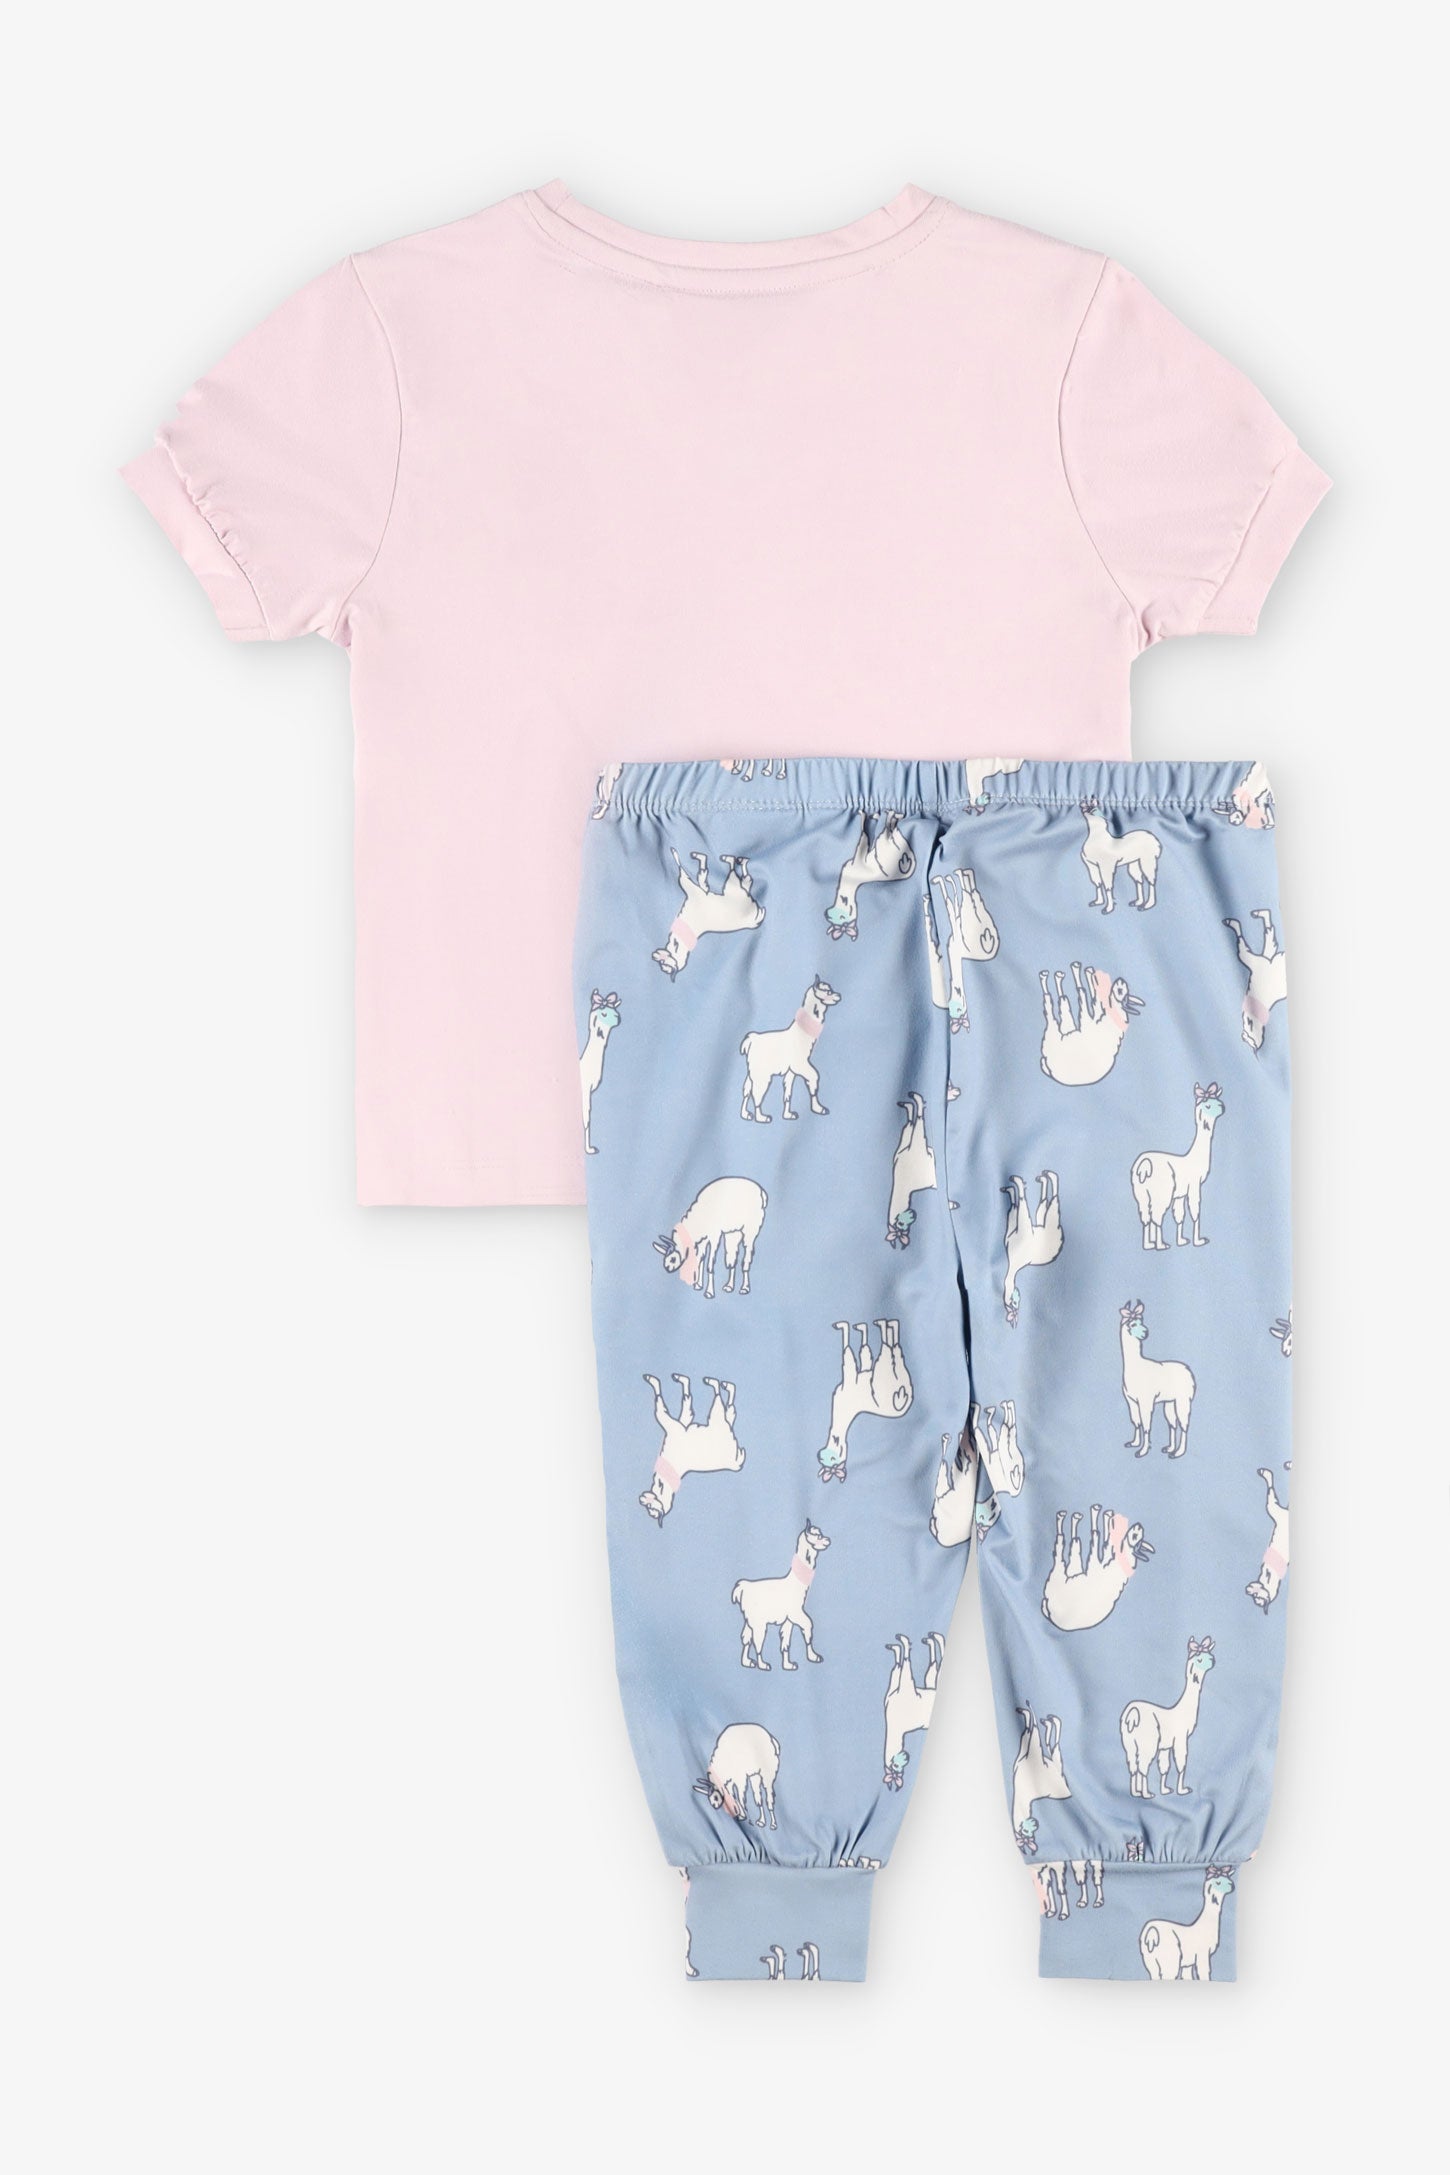 Pyjama 2-pièces Moss assorti famille, 2/35$ - Enfant fille && LILAS